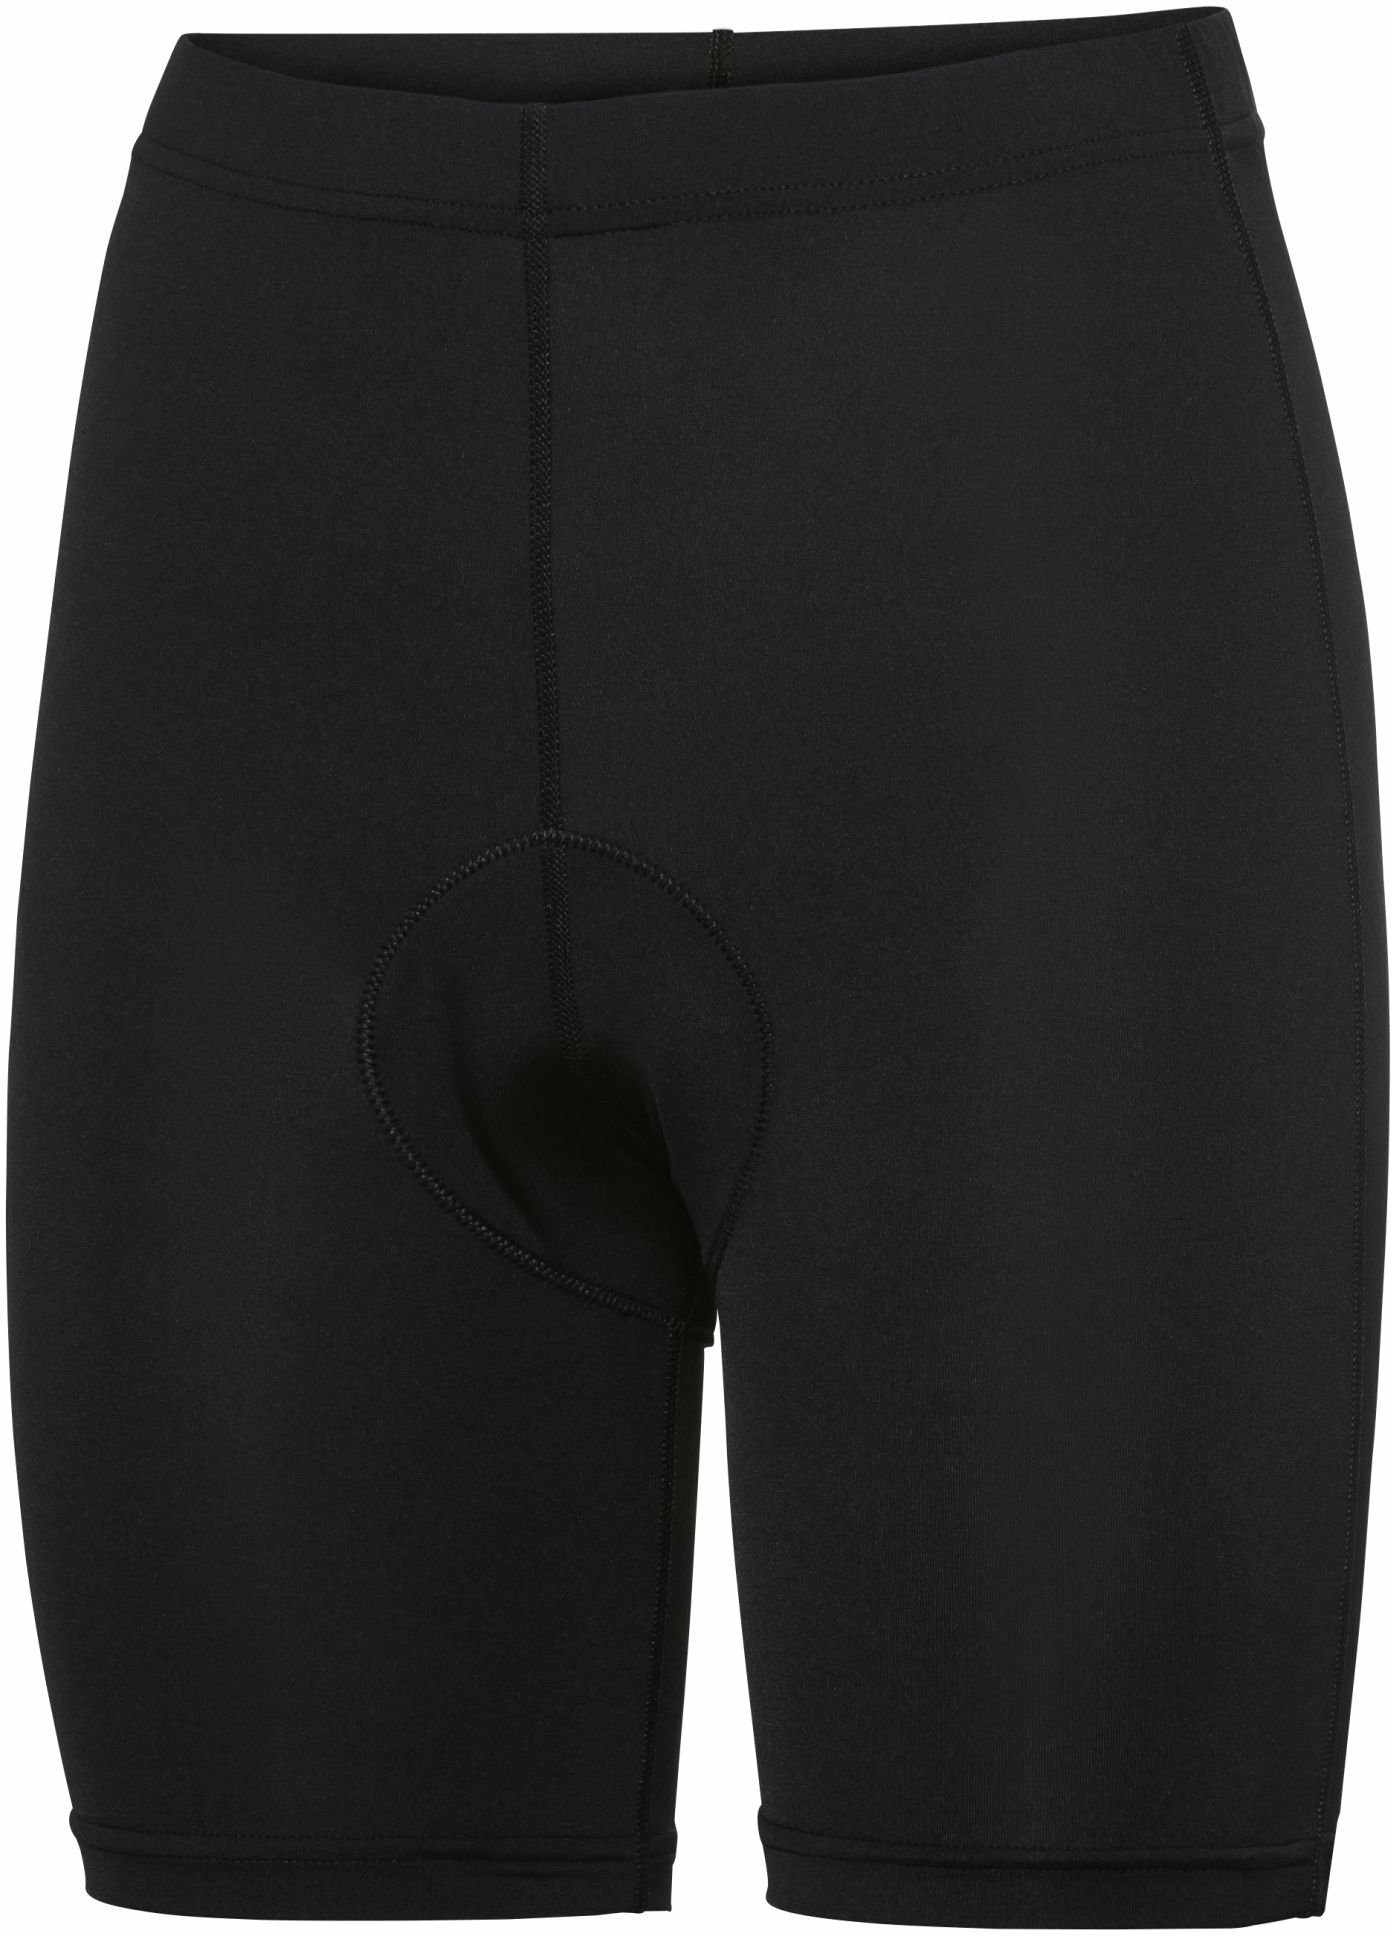 Bekleidung/Unterwäsche: Apura  Damen Unterhose Baselayer Shorts Pura L 